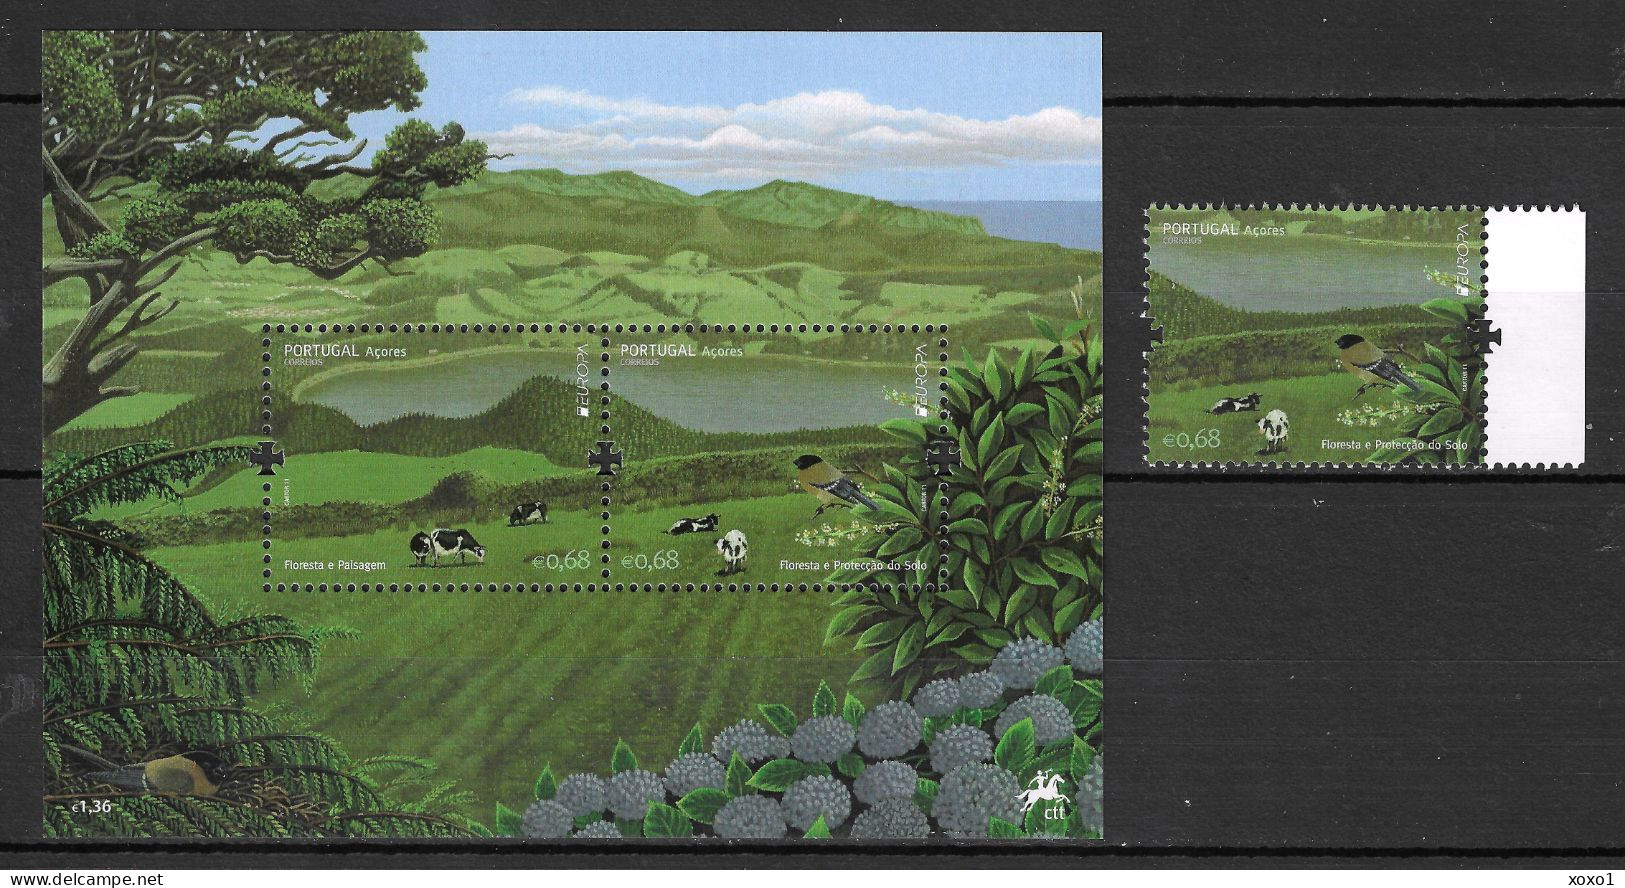 Portugal Azores 2011 MiNr. 569 - 70 (Block 46) Azoren EUROPA CEPT Forests Birds Farm Cows Plants 1v +1 S\sh MNH** 4.80 € - 2011